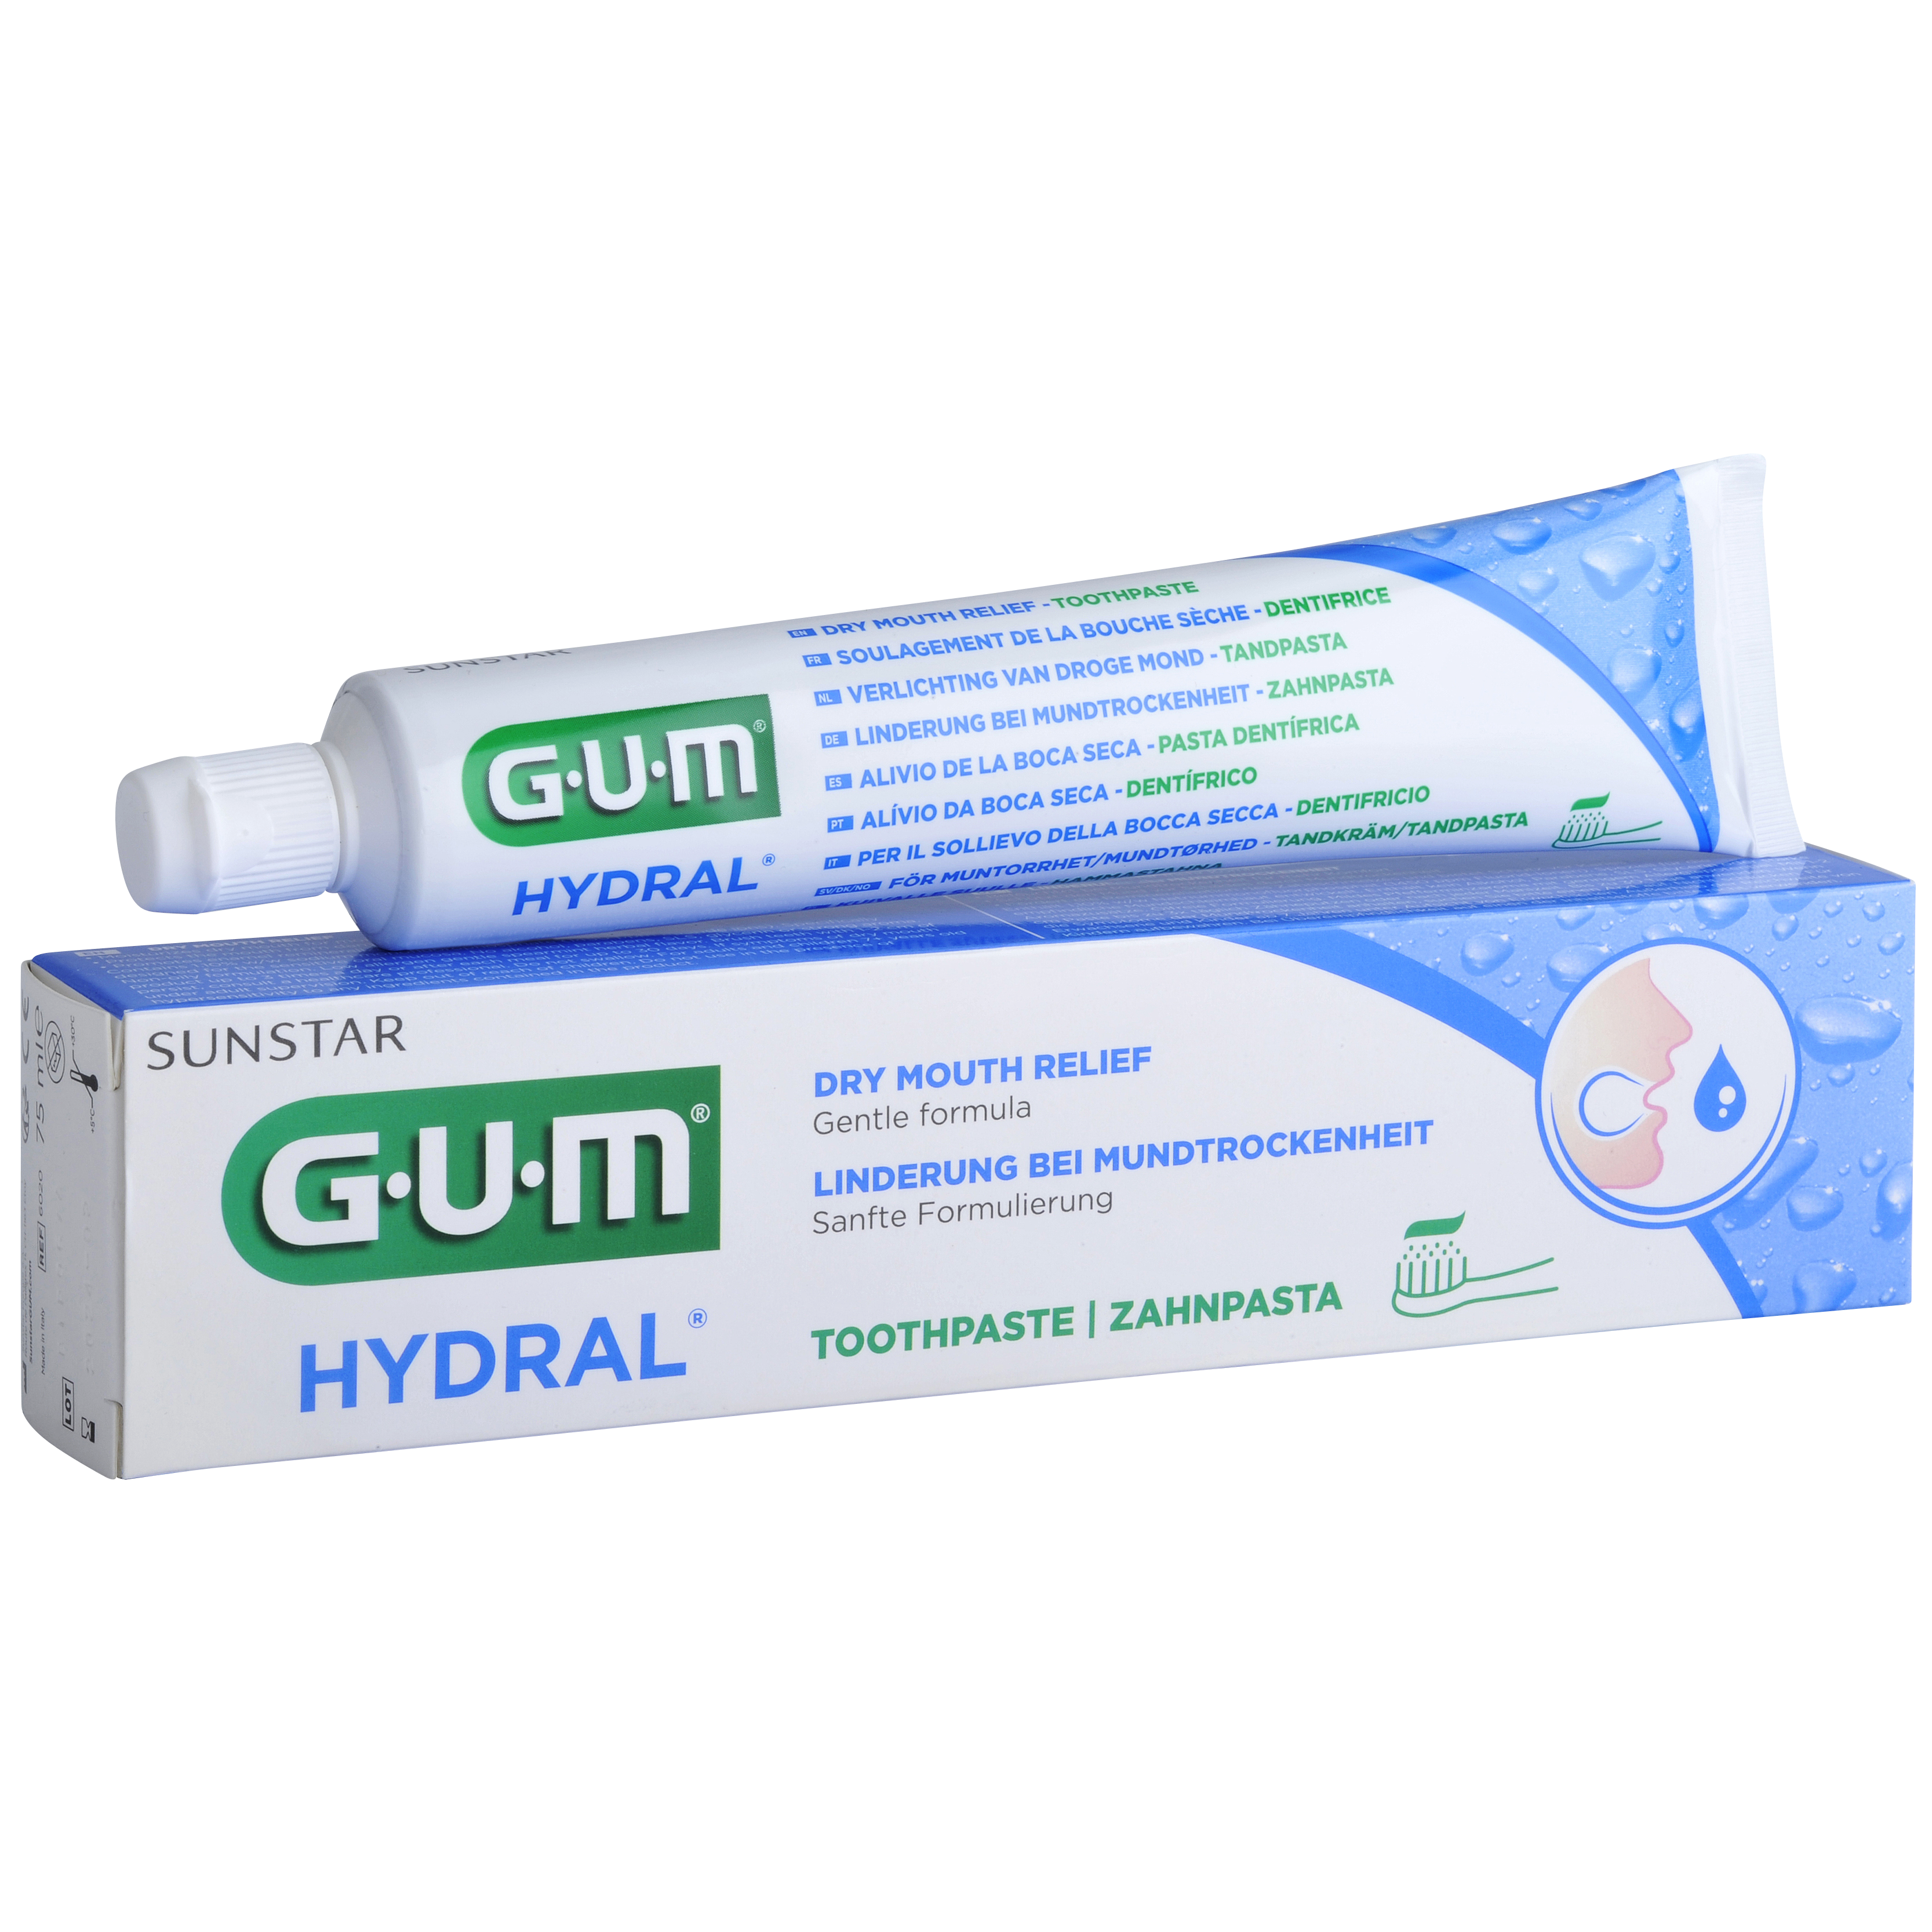 P6020-DE-EN-GUM-HYDRAL-Toothpaste-75ml-Box-Tube.png